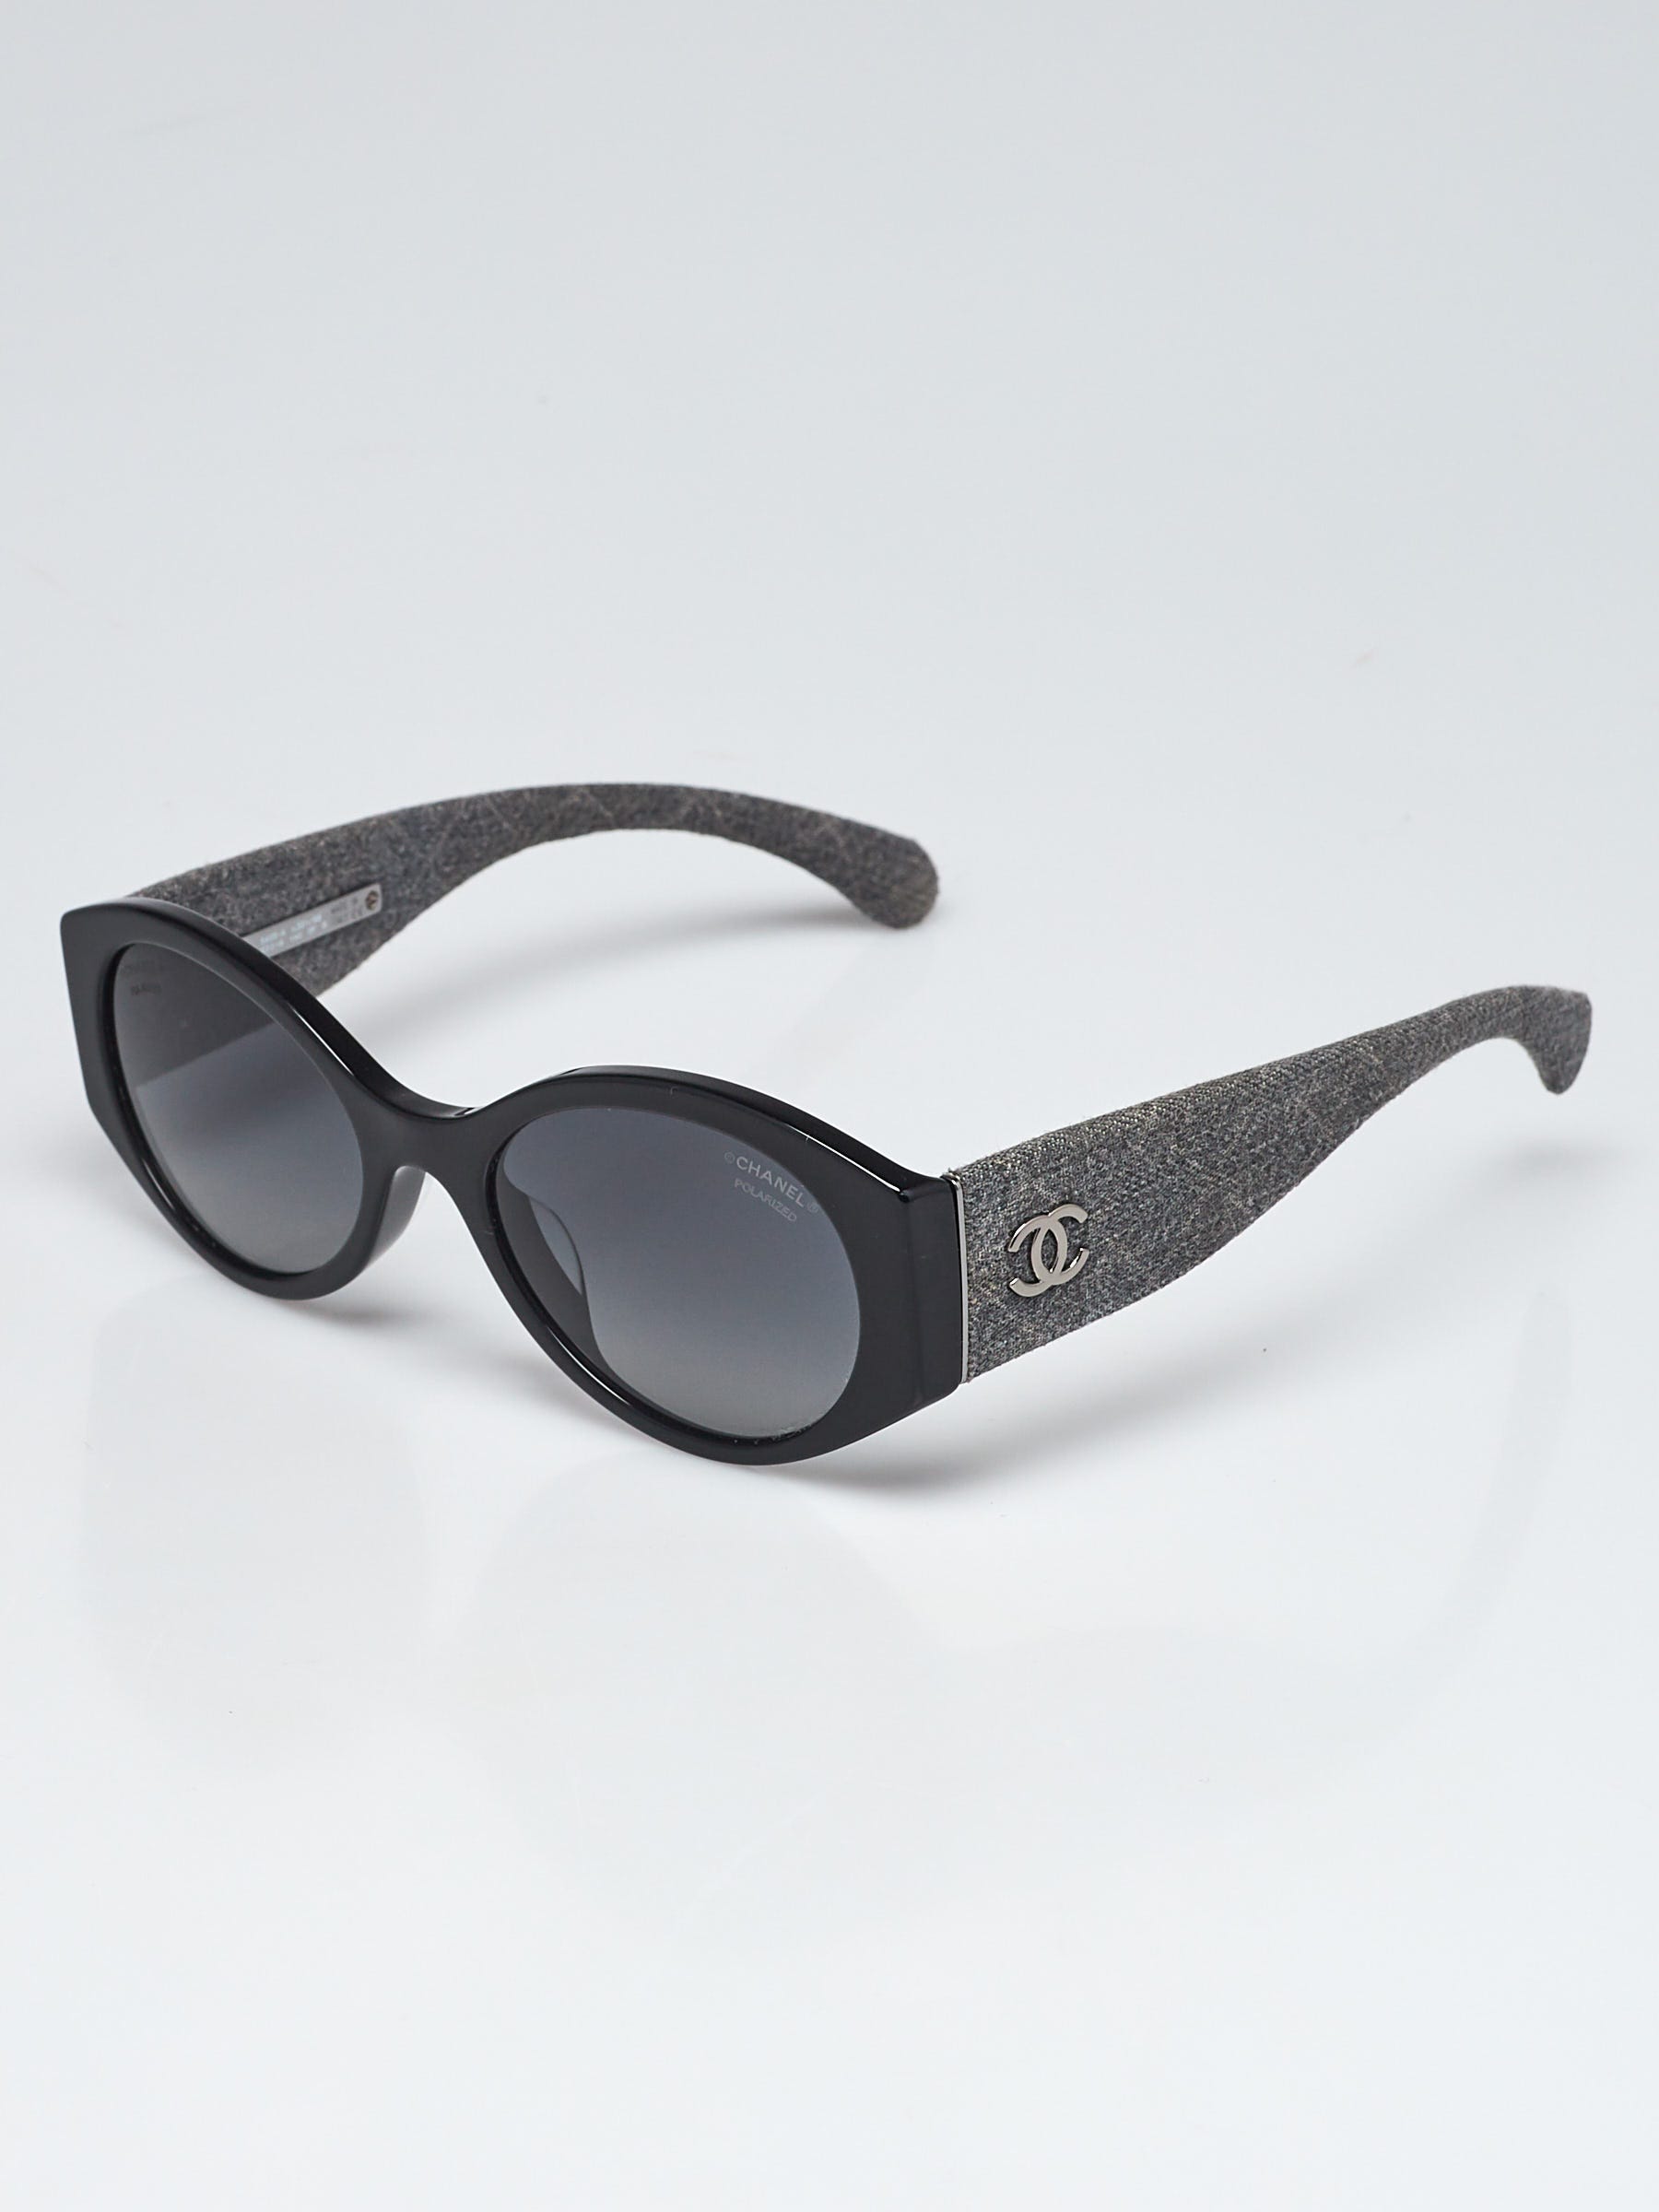 Chanel Women's 5469B Oval Sunglasses